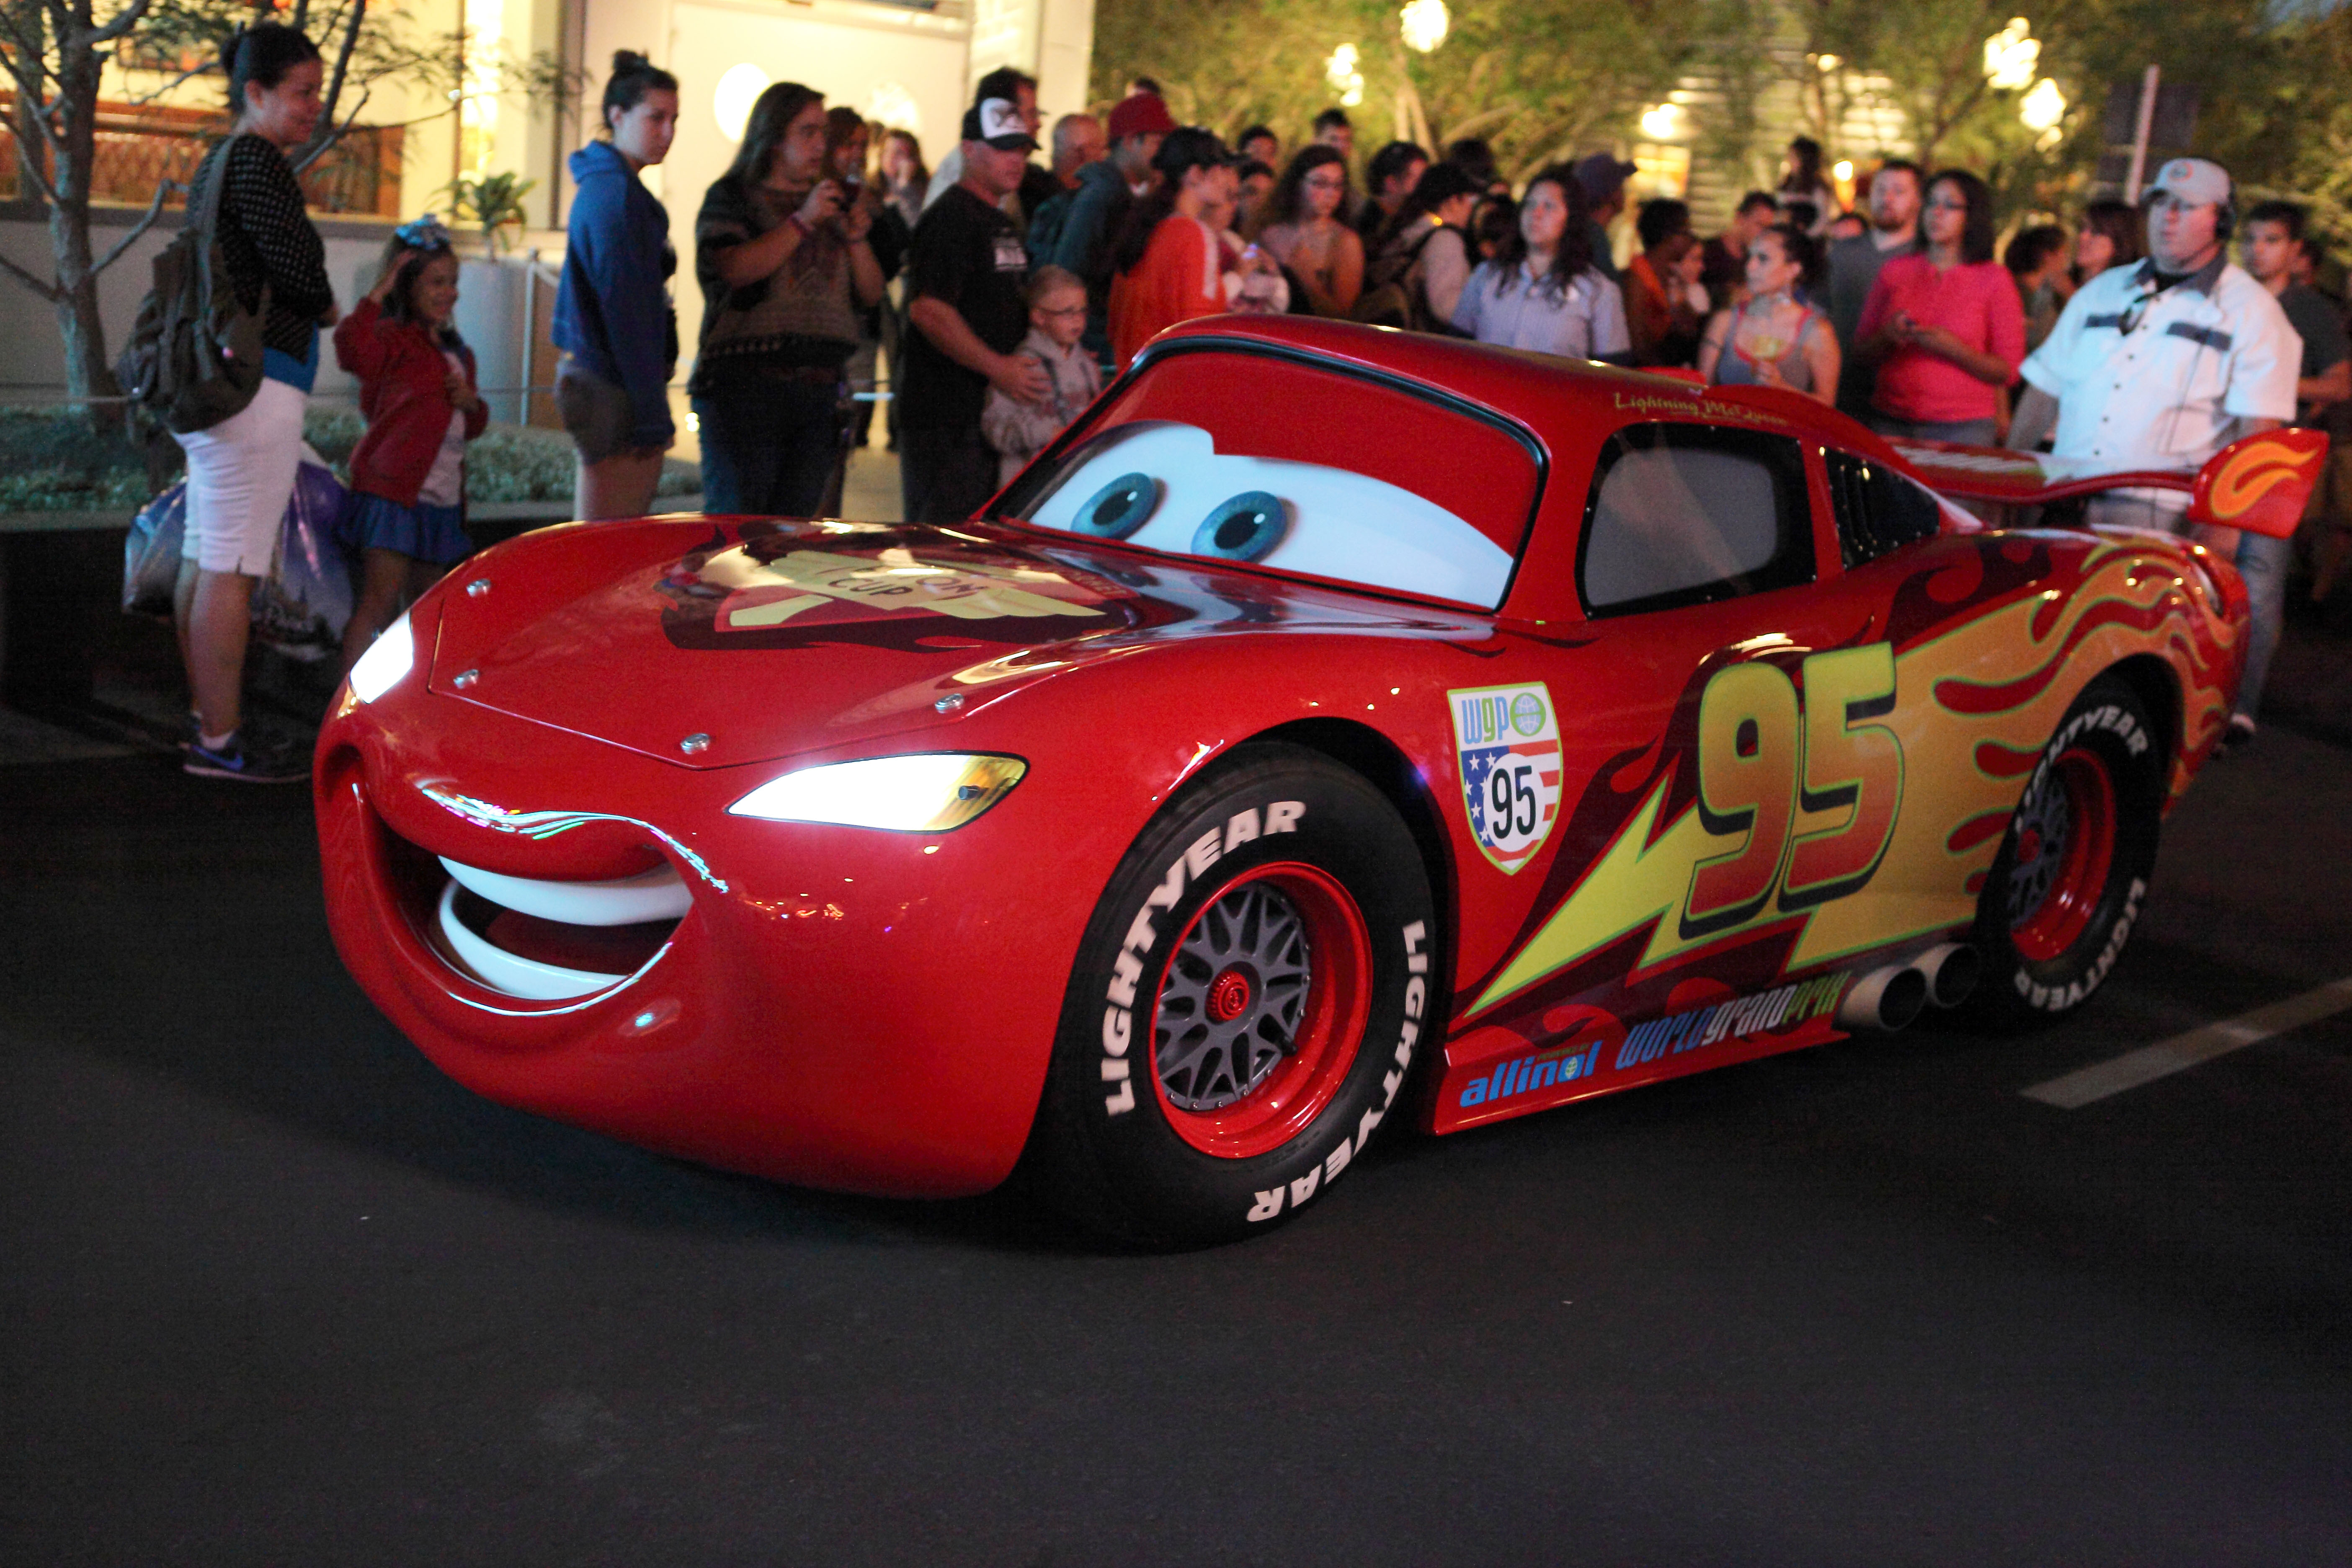 Archivo:Lightning McQueen (34615708803).jpg - Wikipedia, la